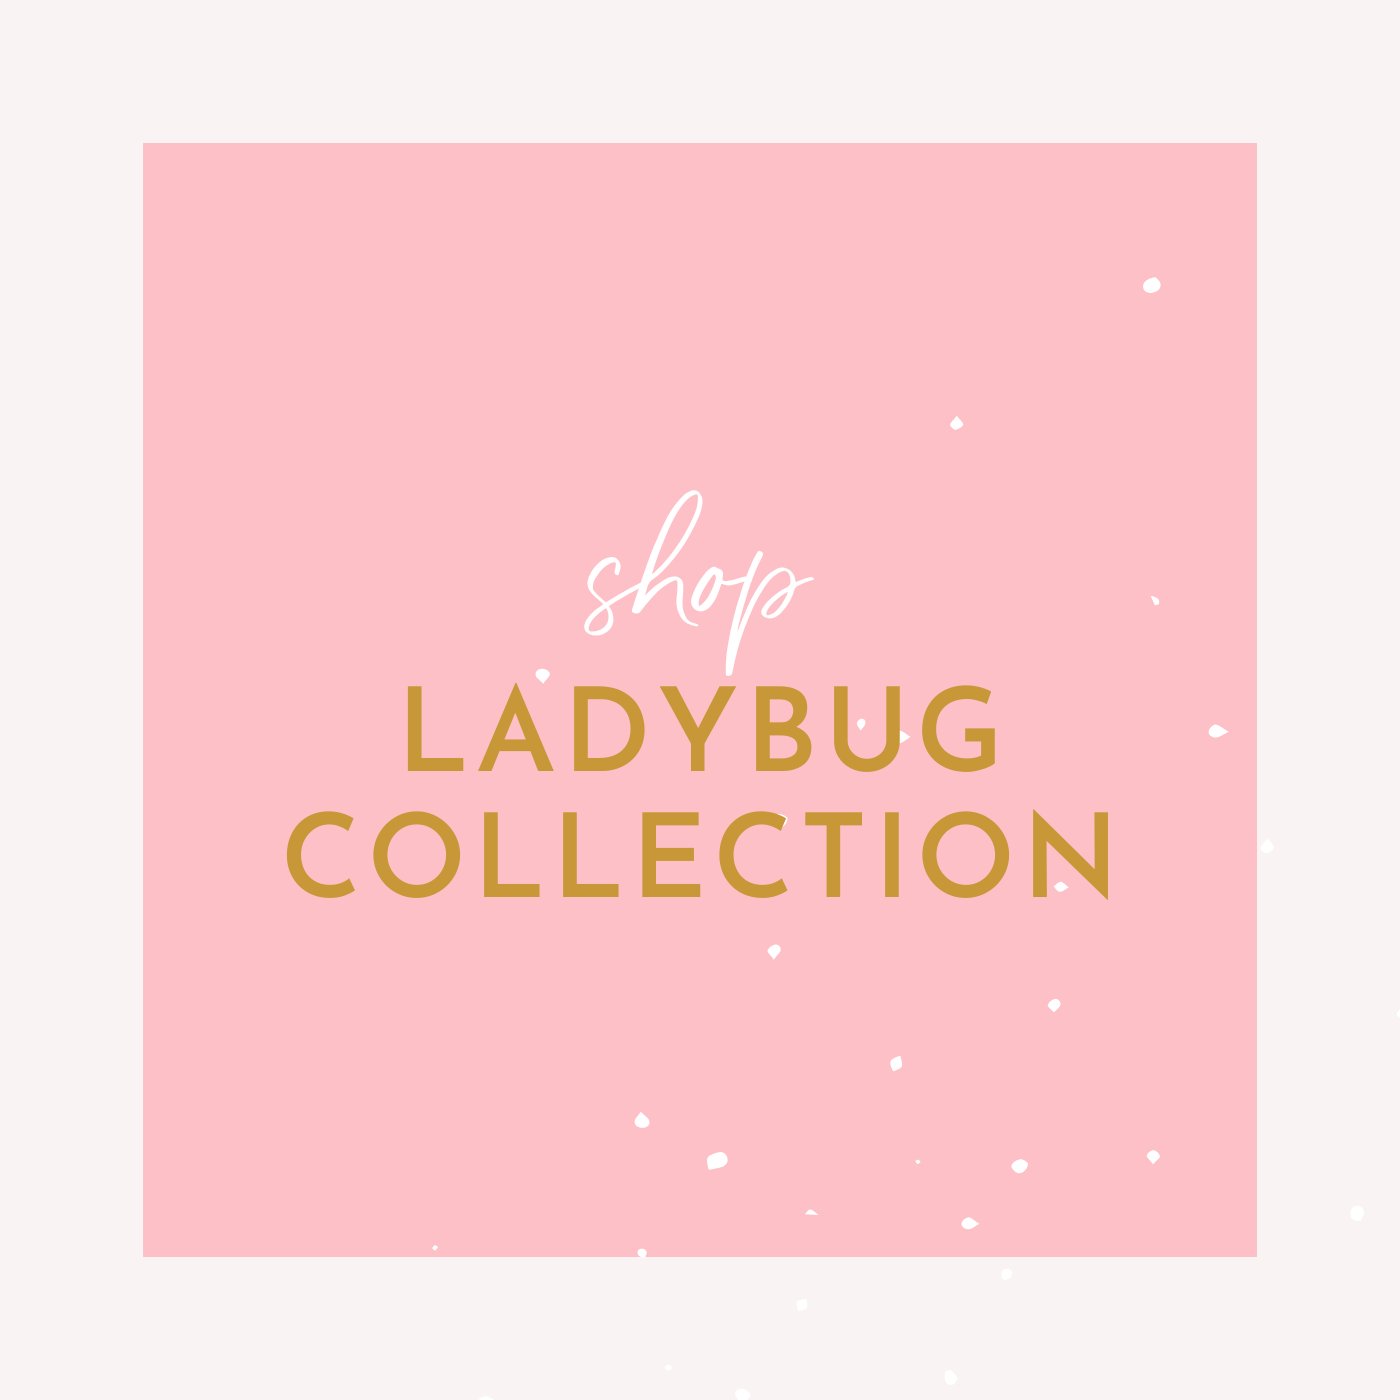 Ladybug Collecion